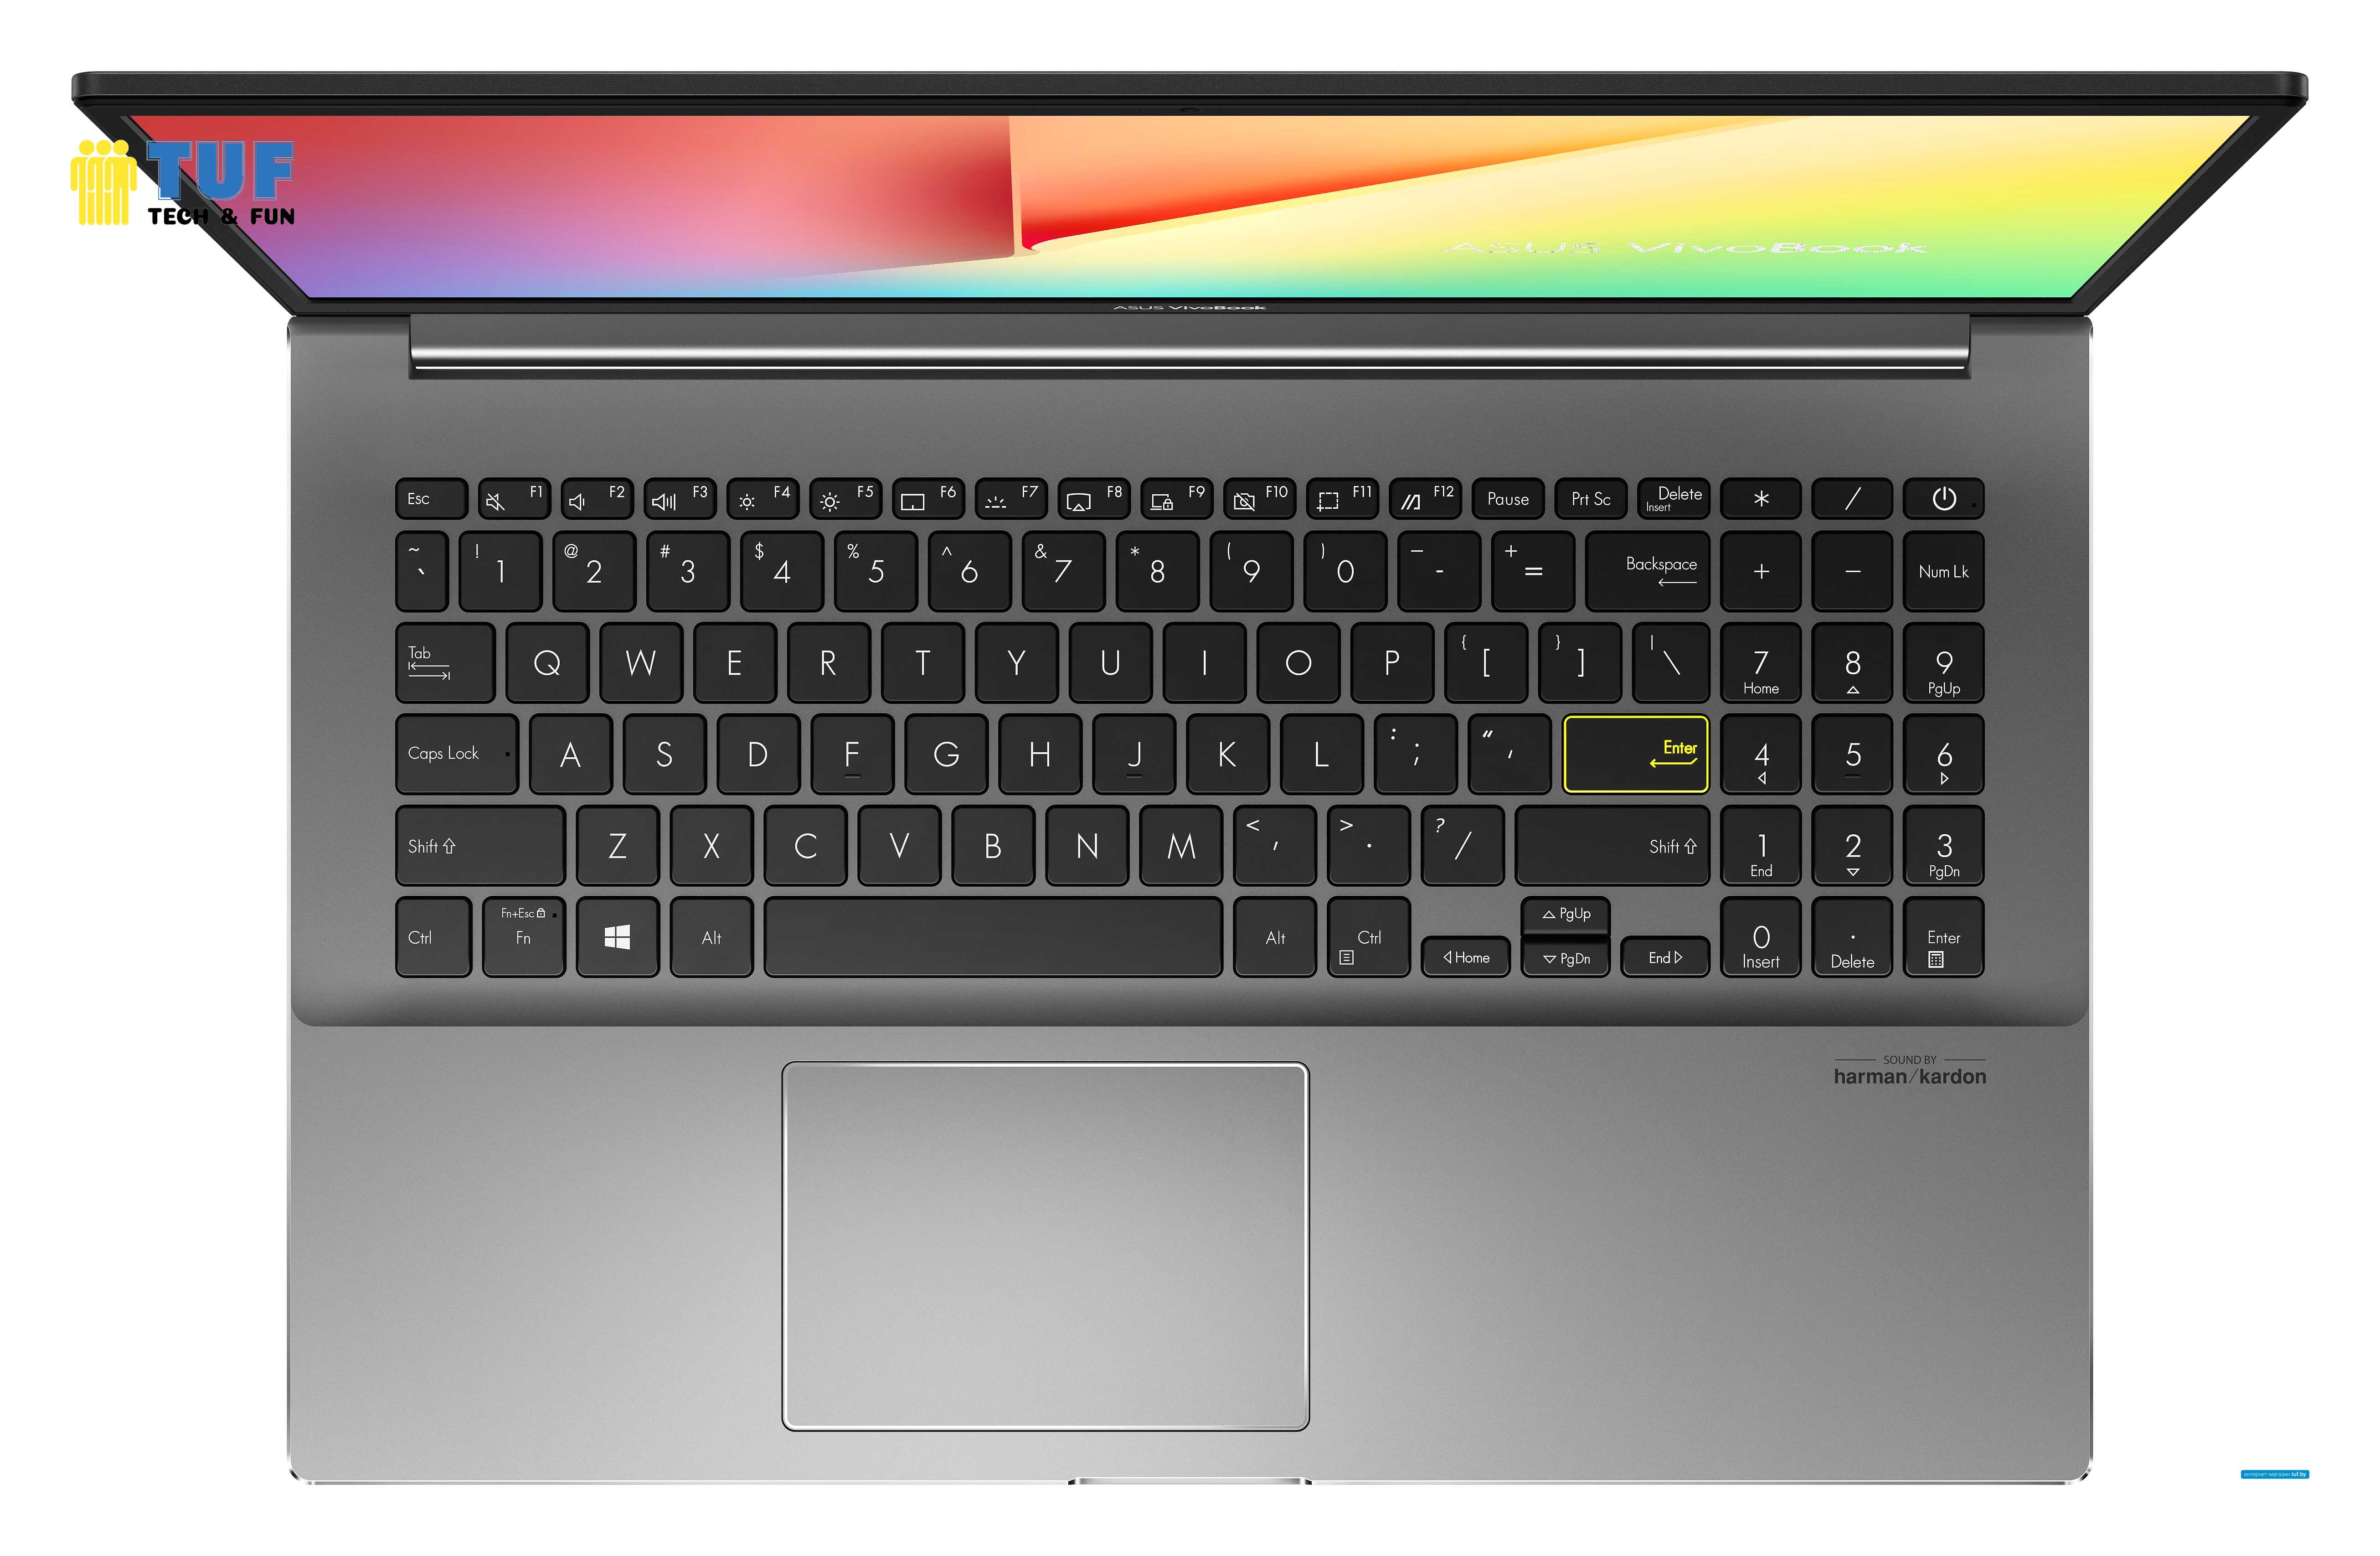 Ноутбук ASUS VivoBook S15 K533EA-BN238T